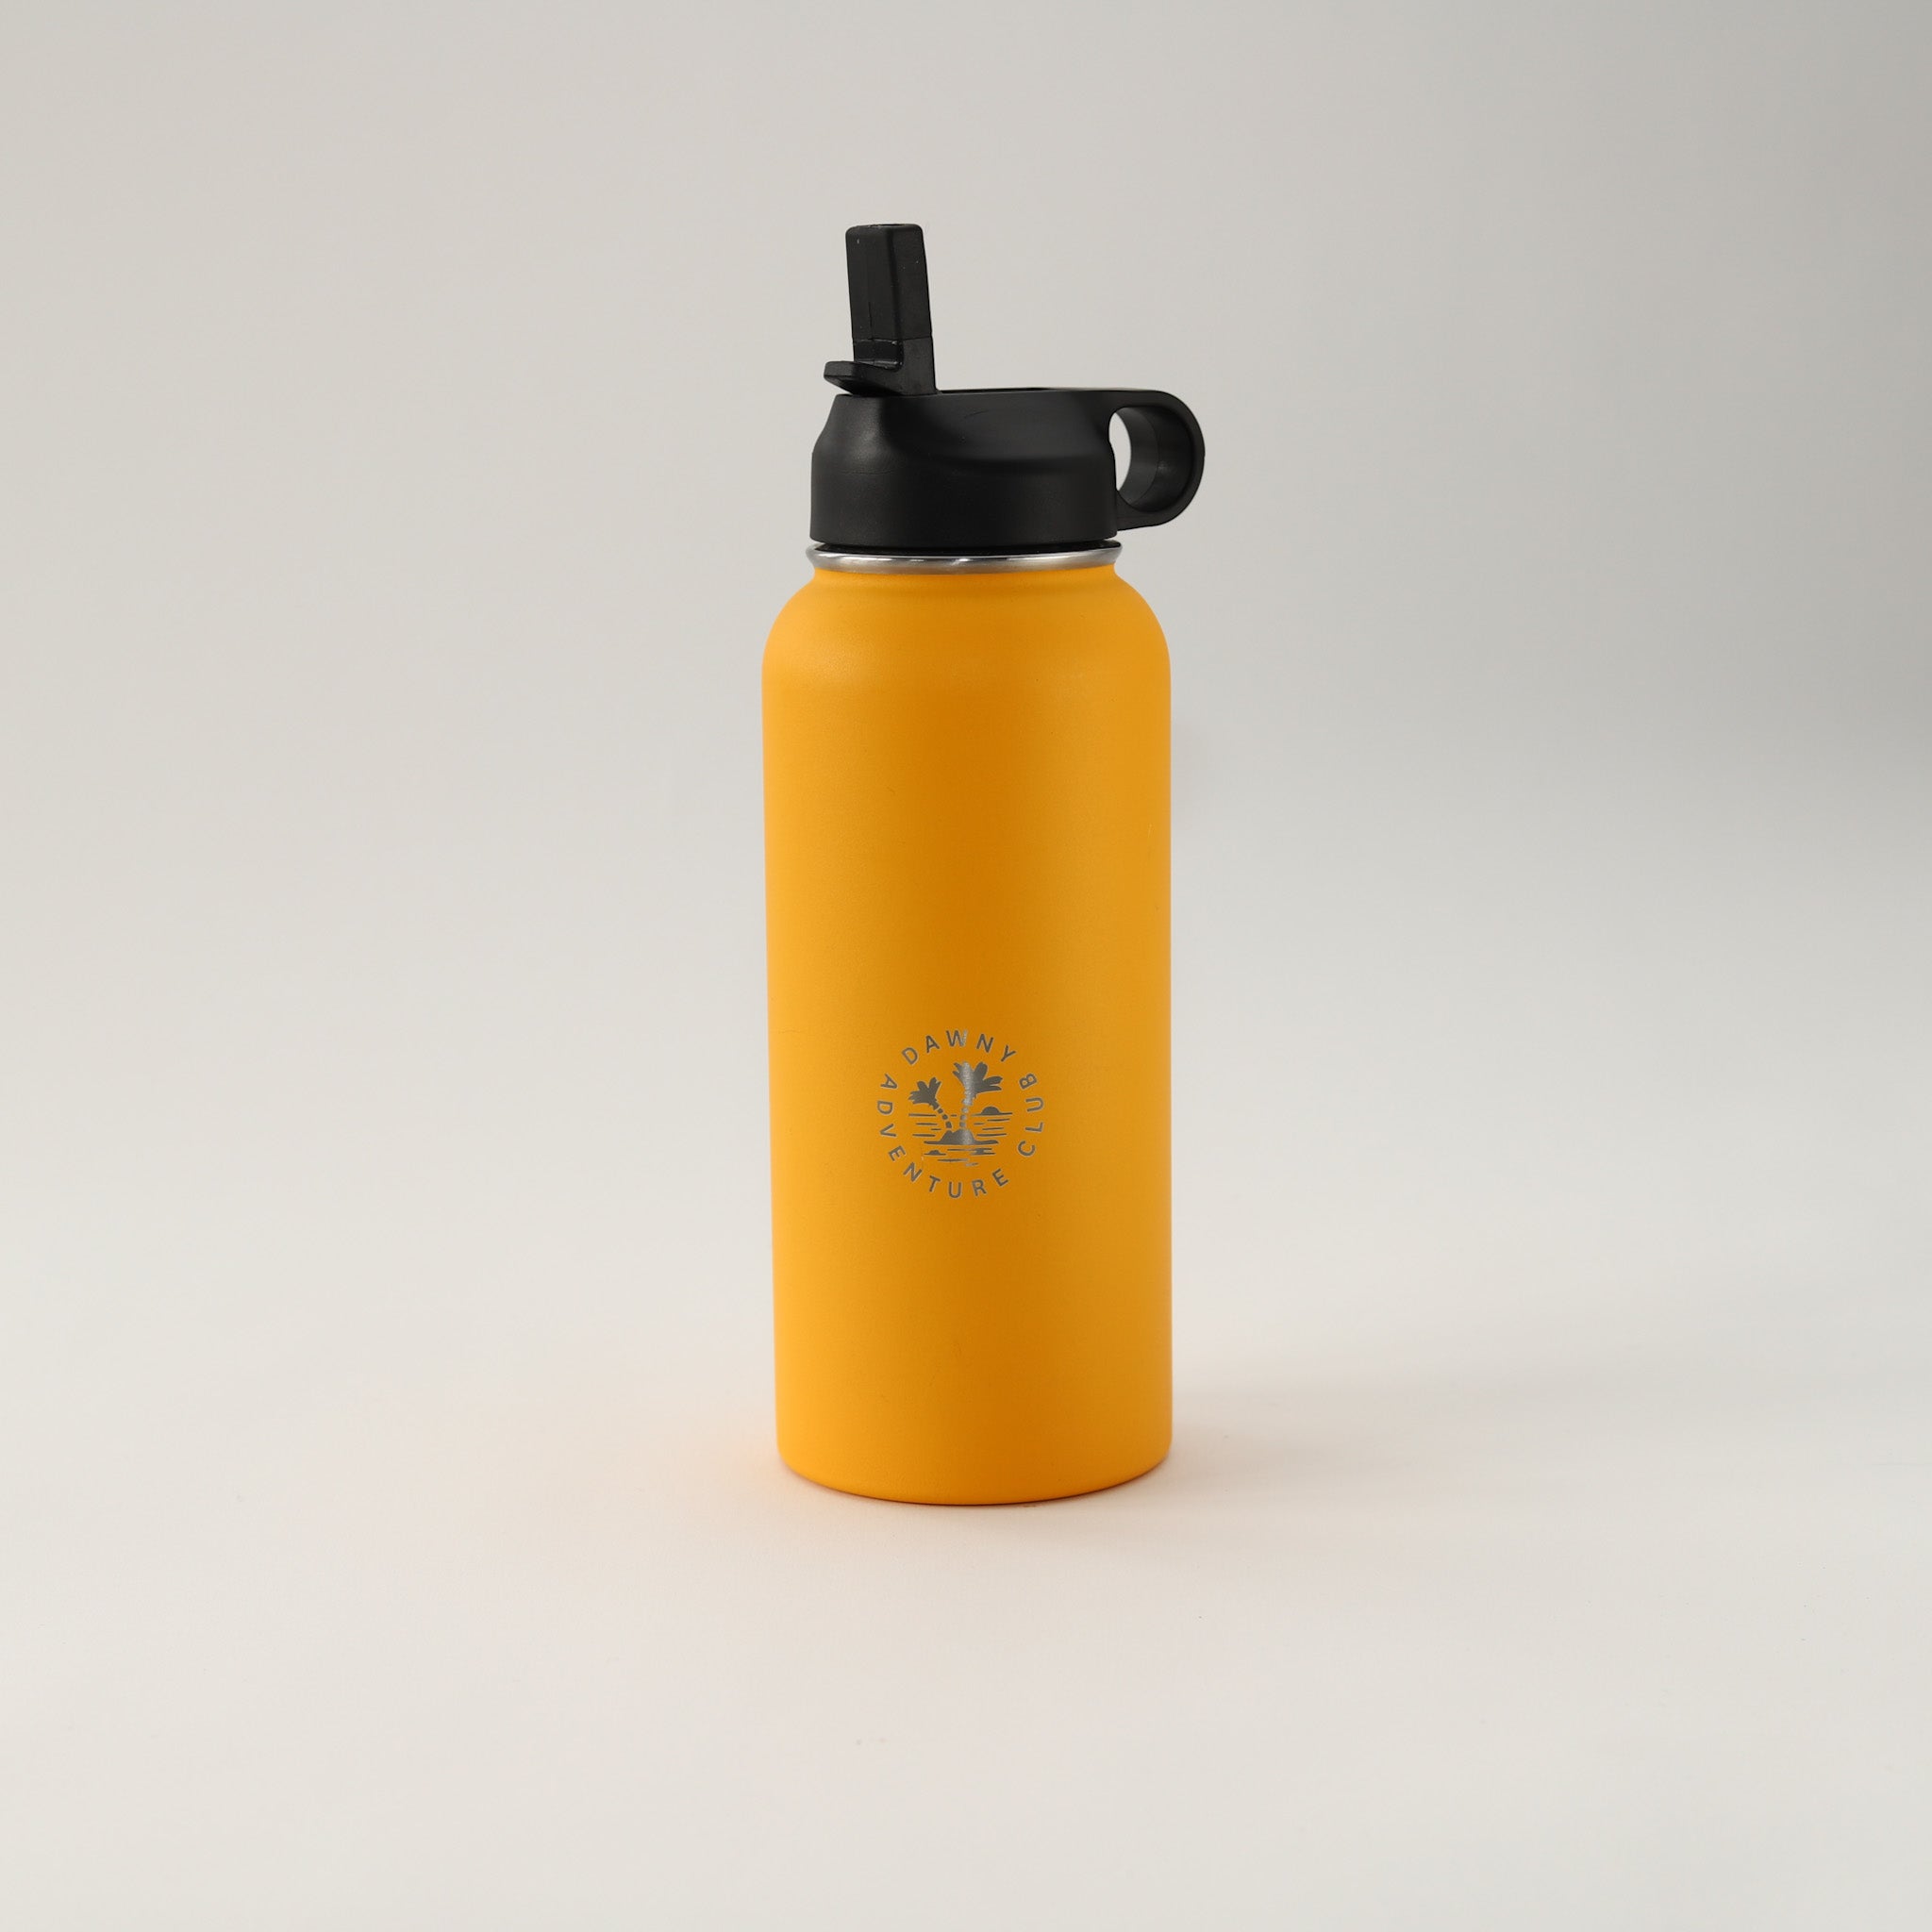 950ml Yellow Orange Dawny Adventure Club Drink Bottle with original sipper lid